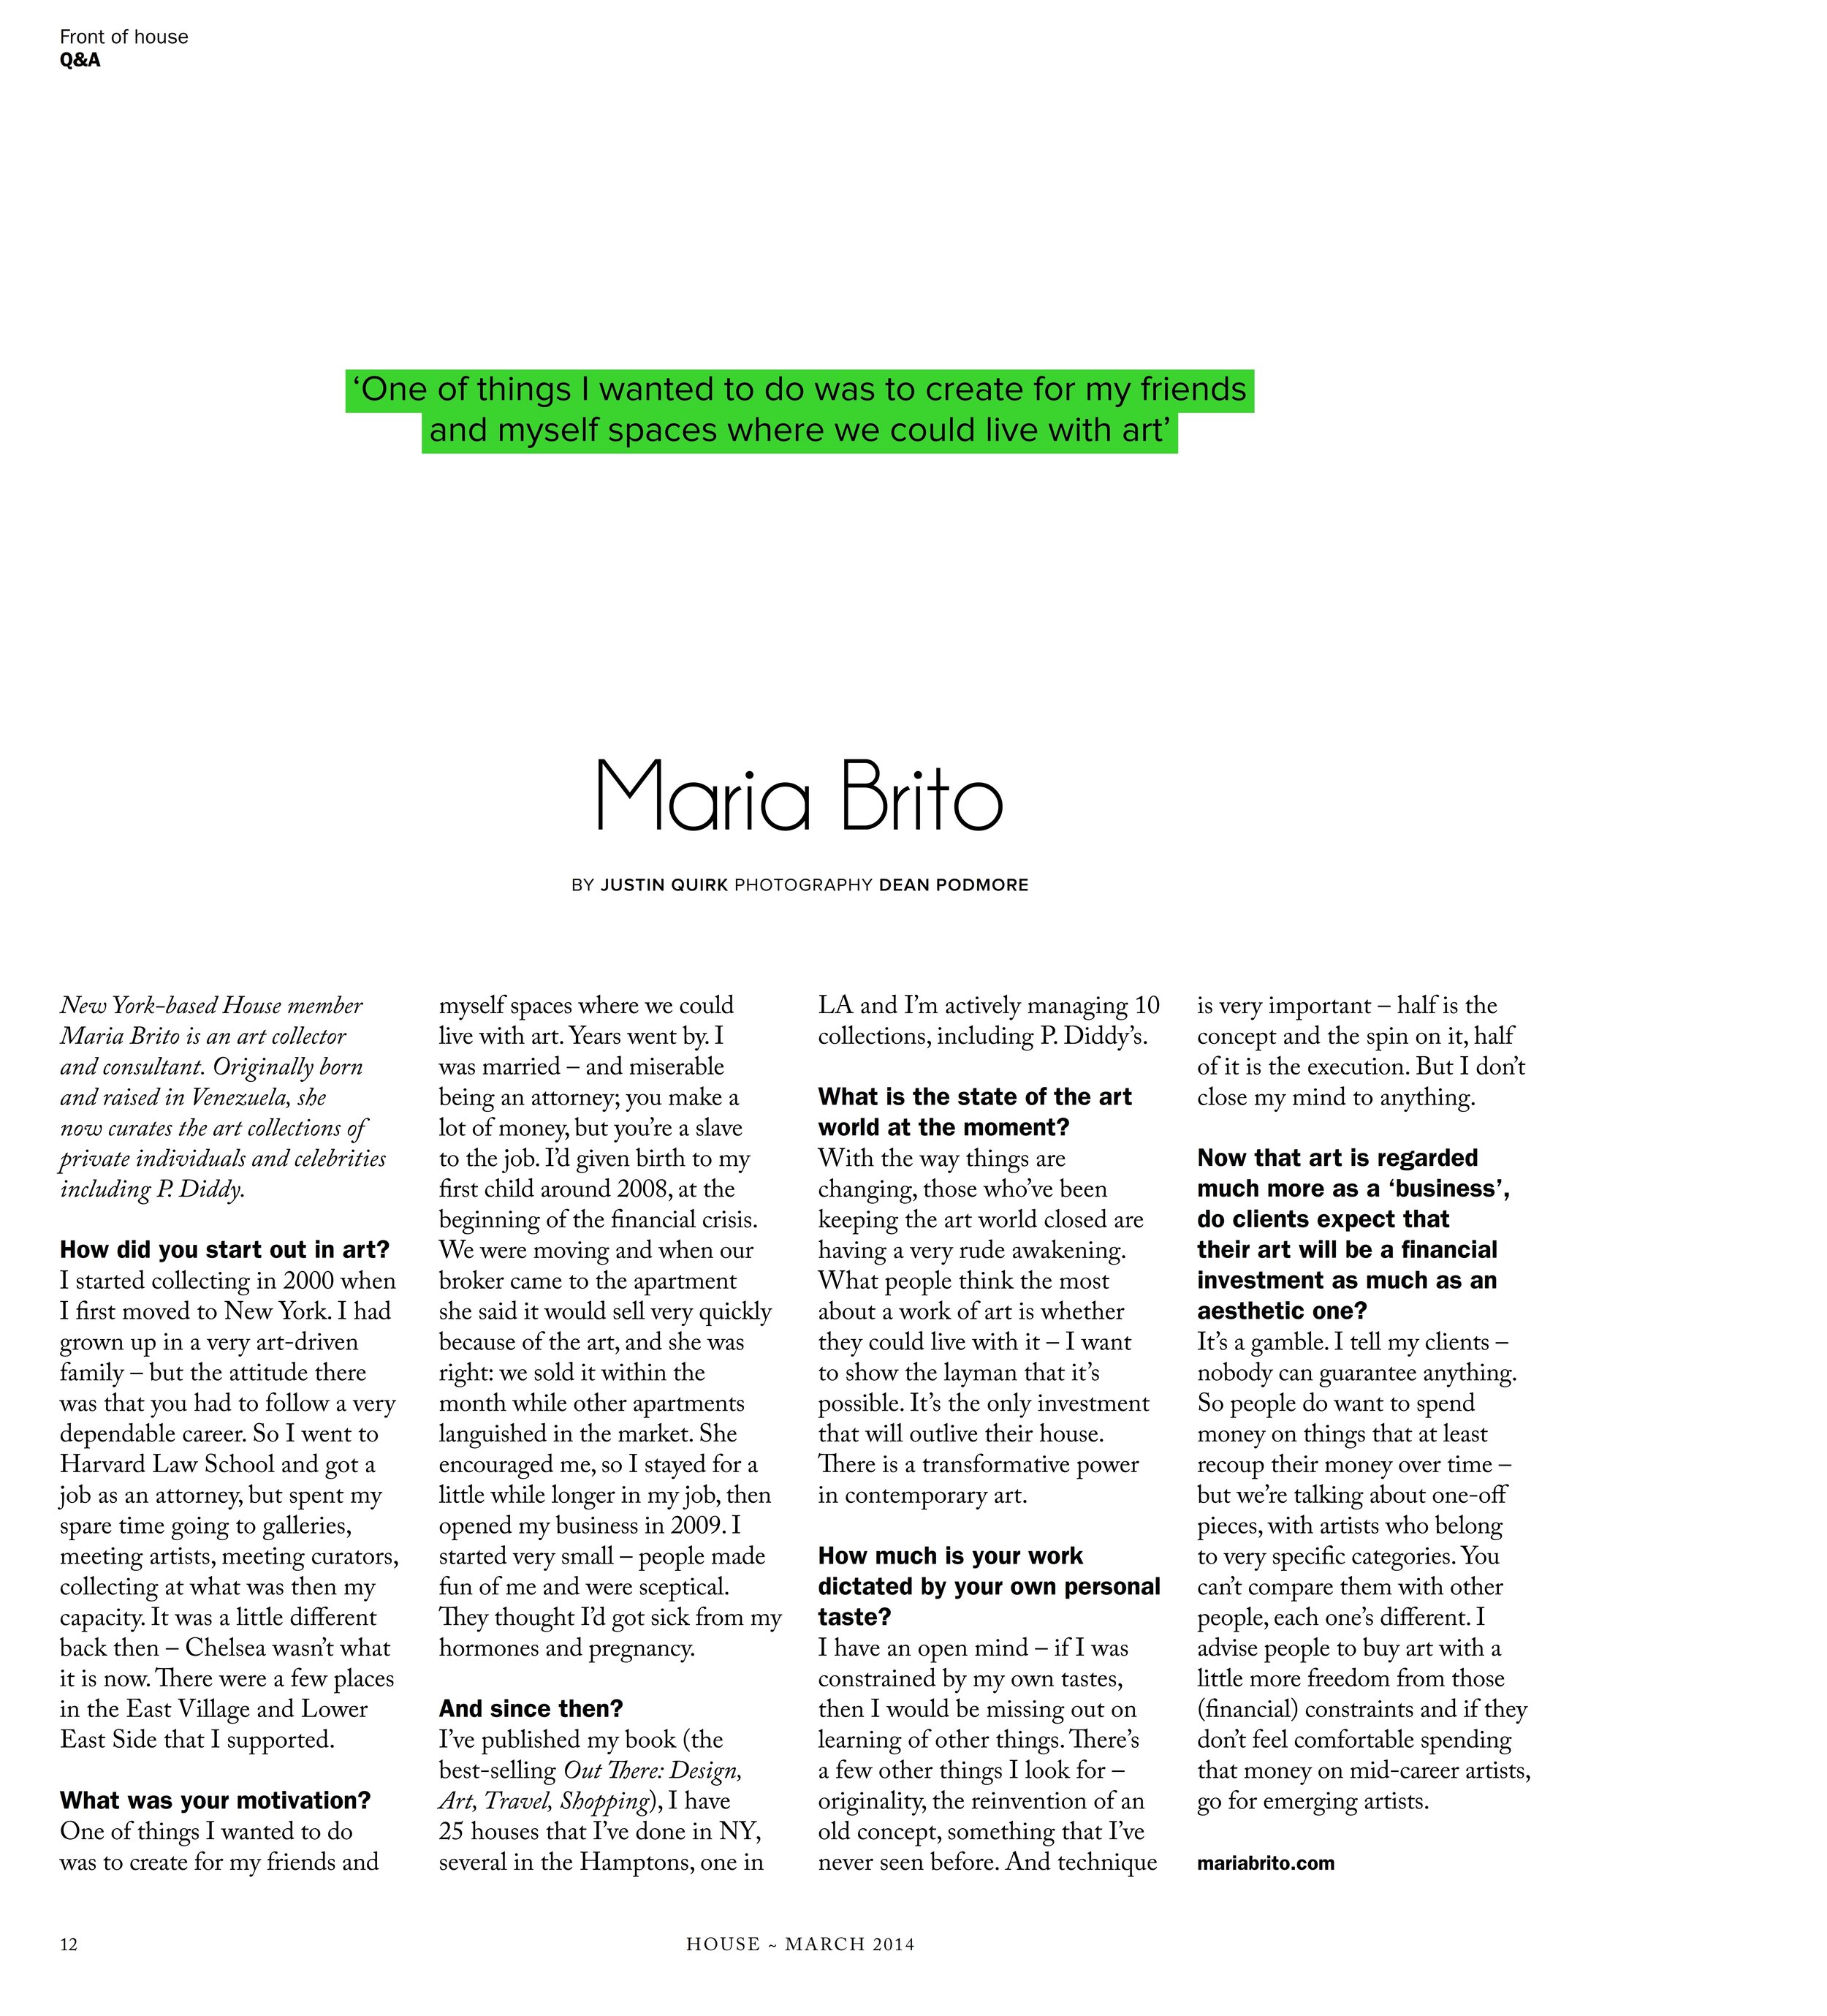 HouseMagazine-Maria Brito_001.jpg